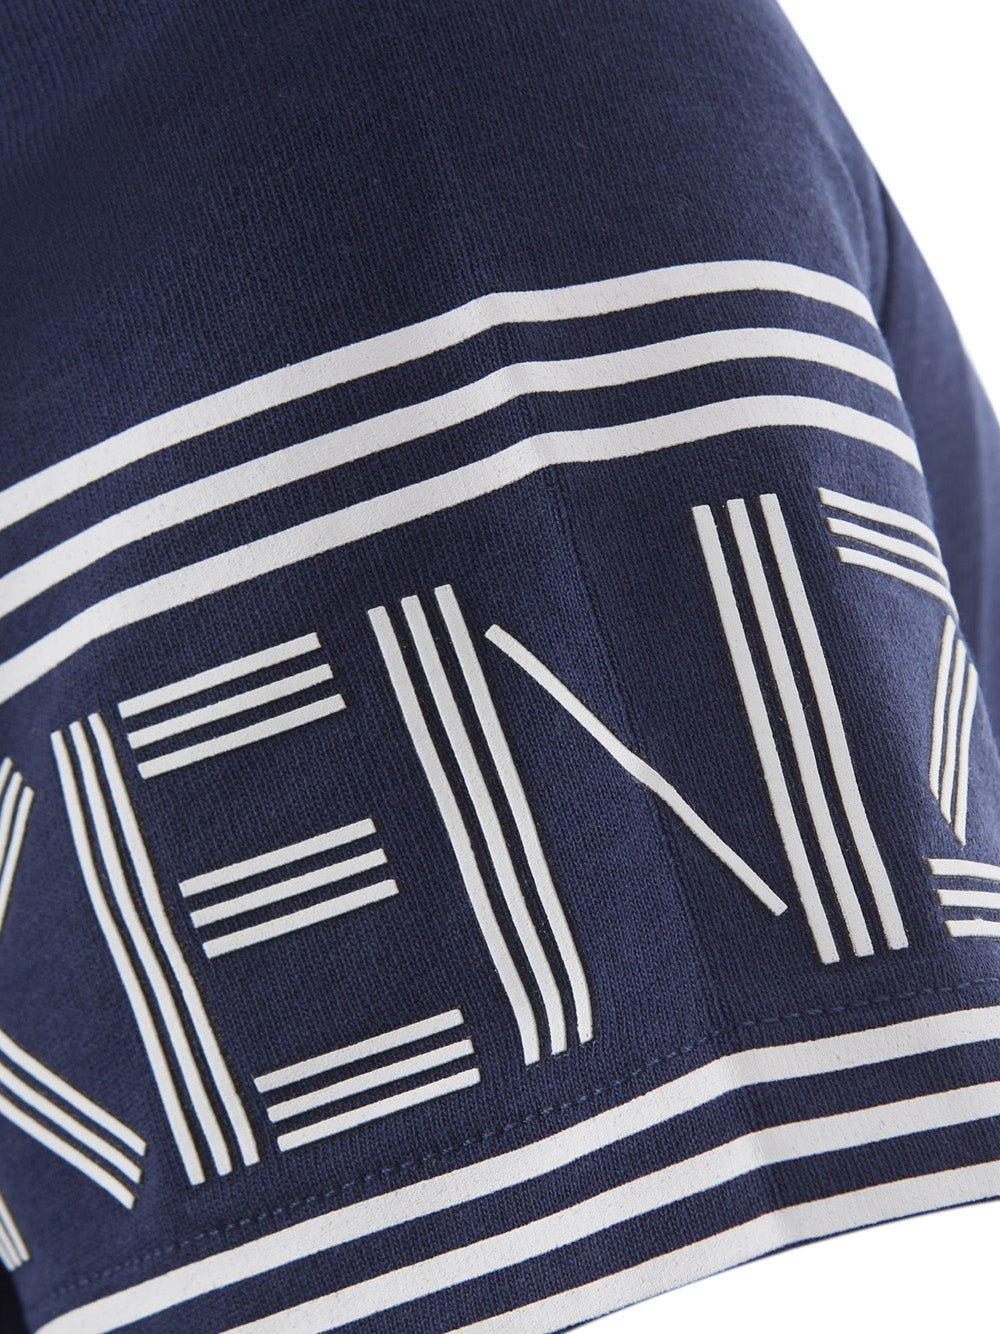 Fashionsarah.com Fashionsarah.com Kenzo Blue Cotton T-Shirt With contrasting Logo on Sleeves